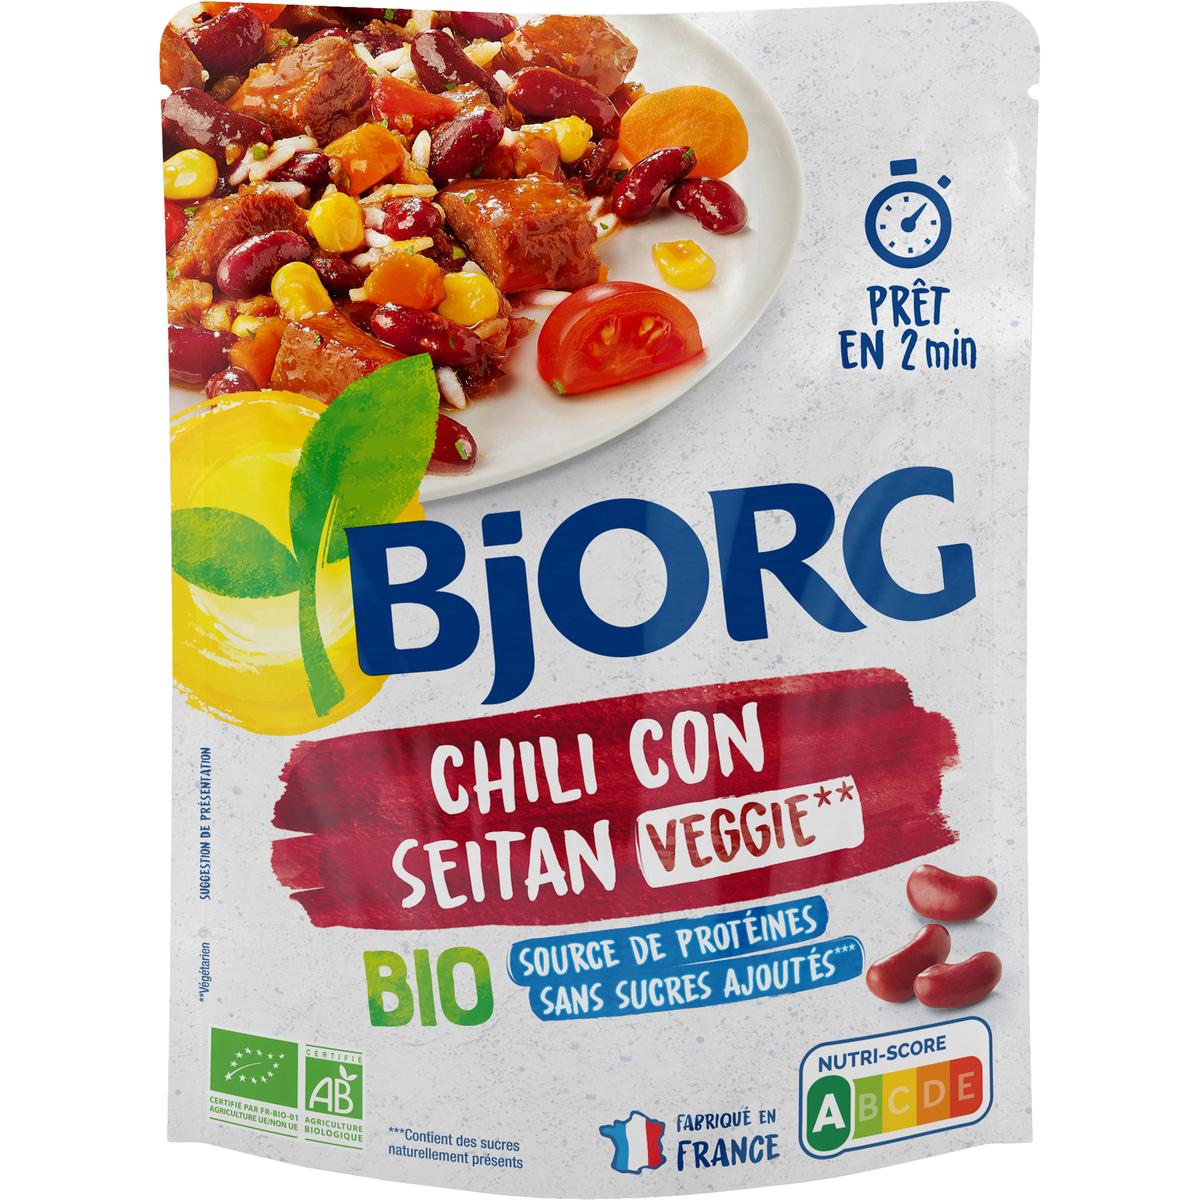 Achat Promotion Bjorg Veggie Chili Con Seitan Plat individuel Bio, 220g